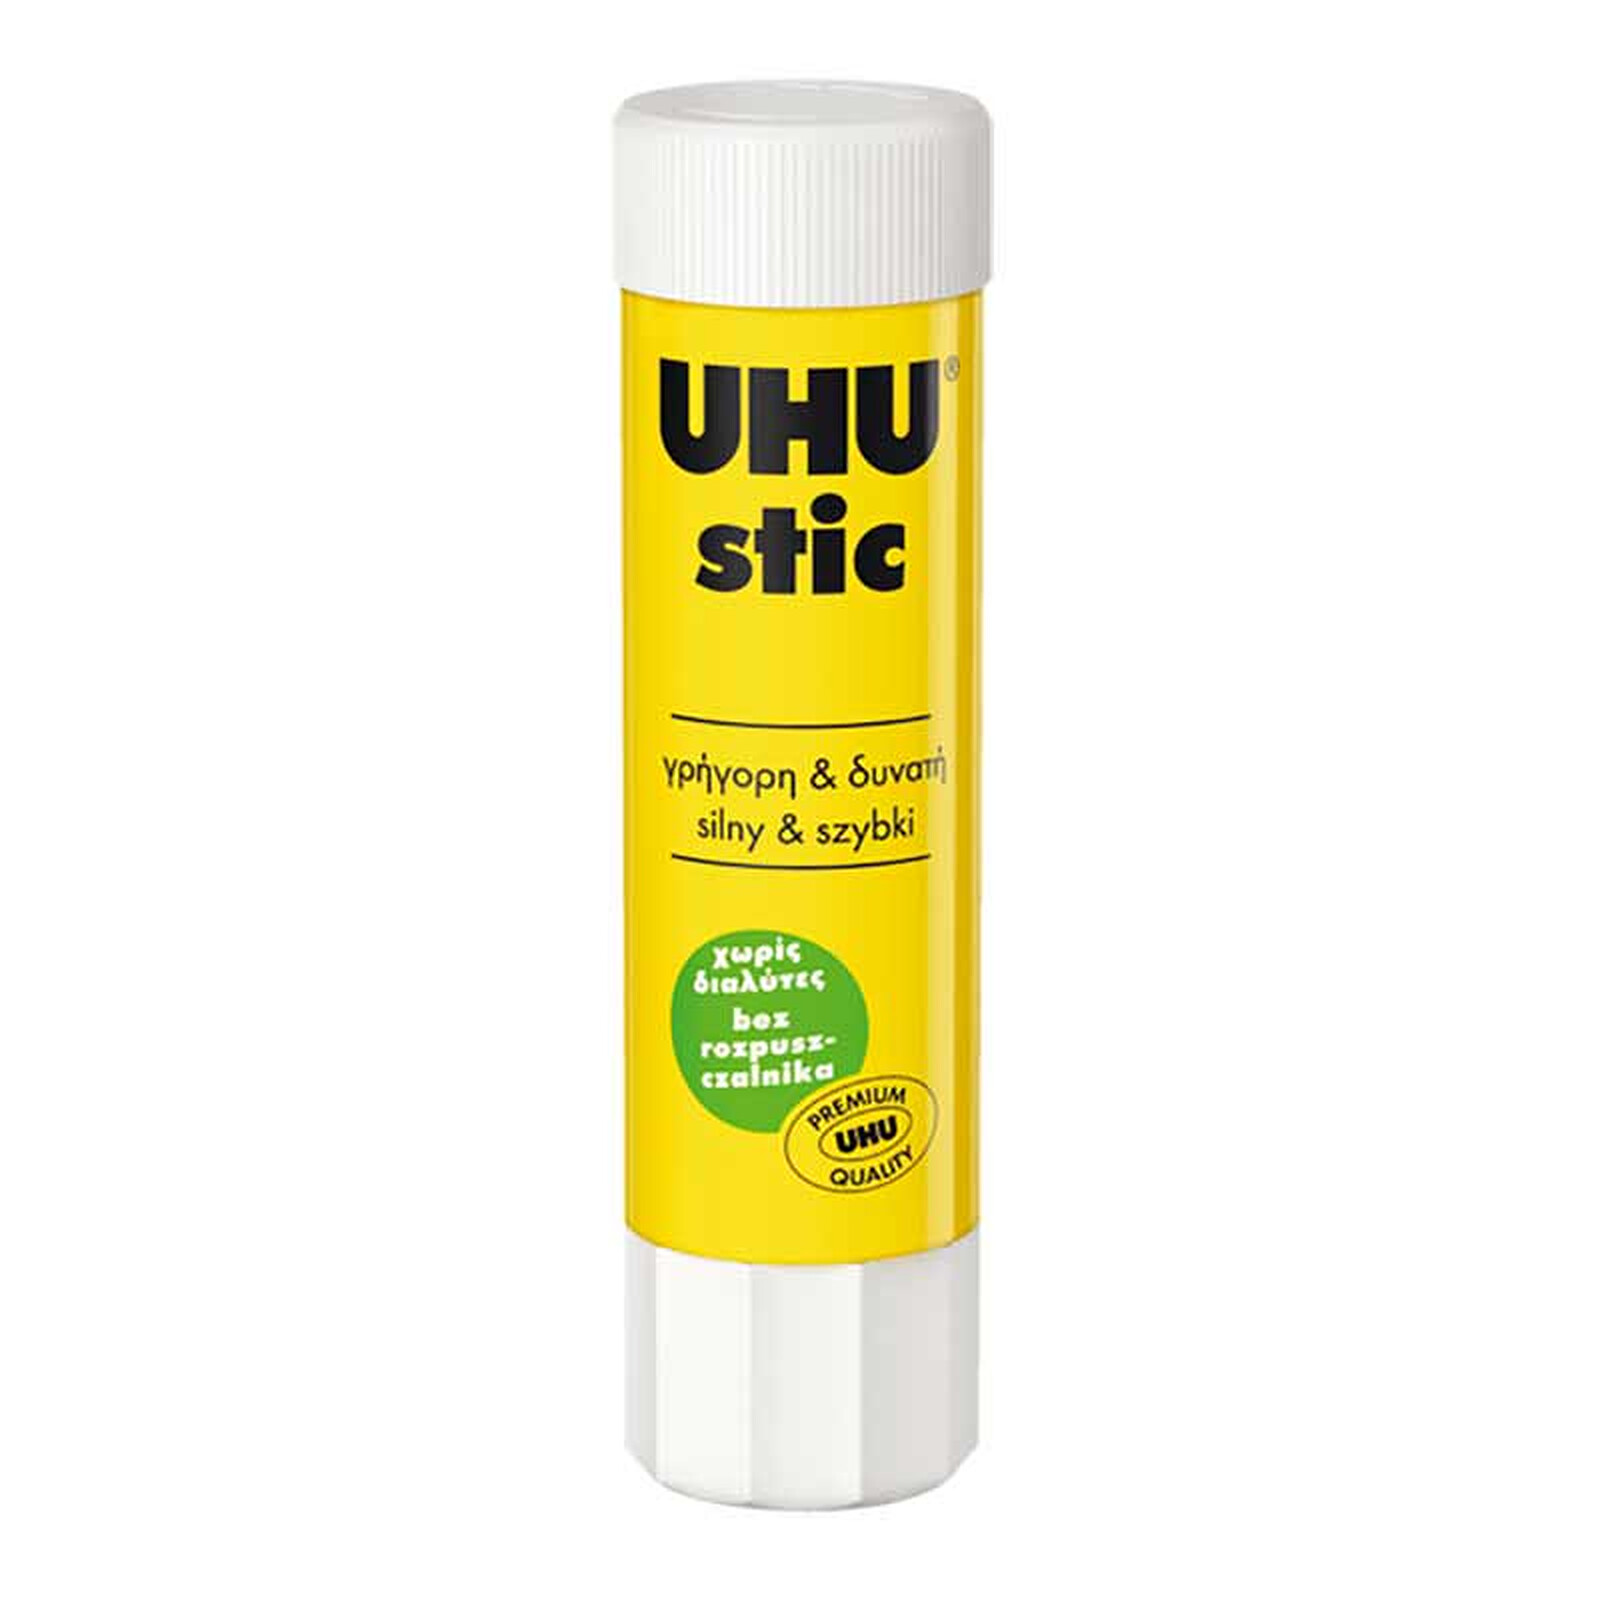 UHU Photo Stic baton de colle 21 g - Ruban adhésif & colle - LDLC